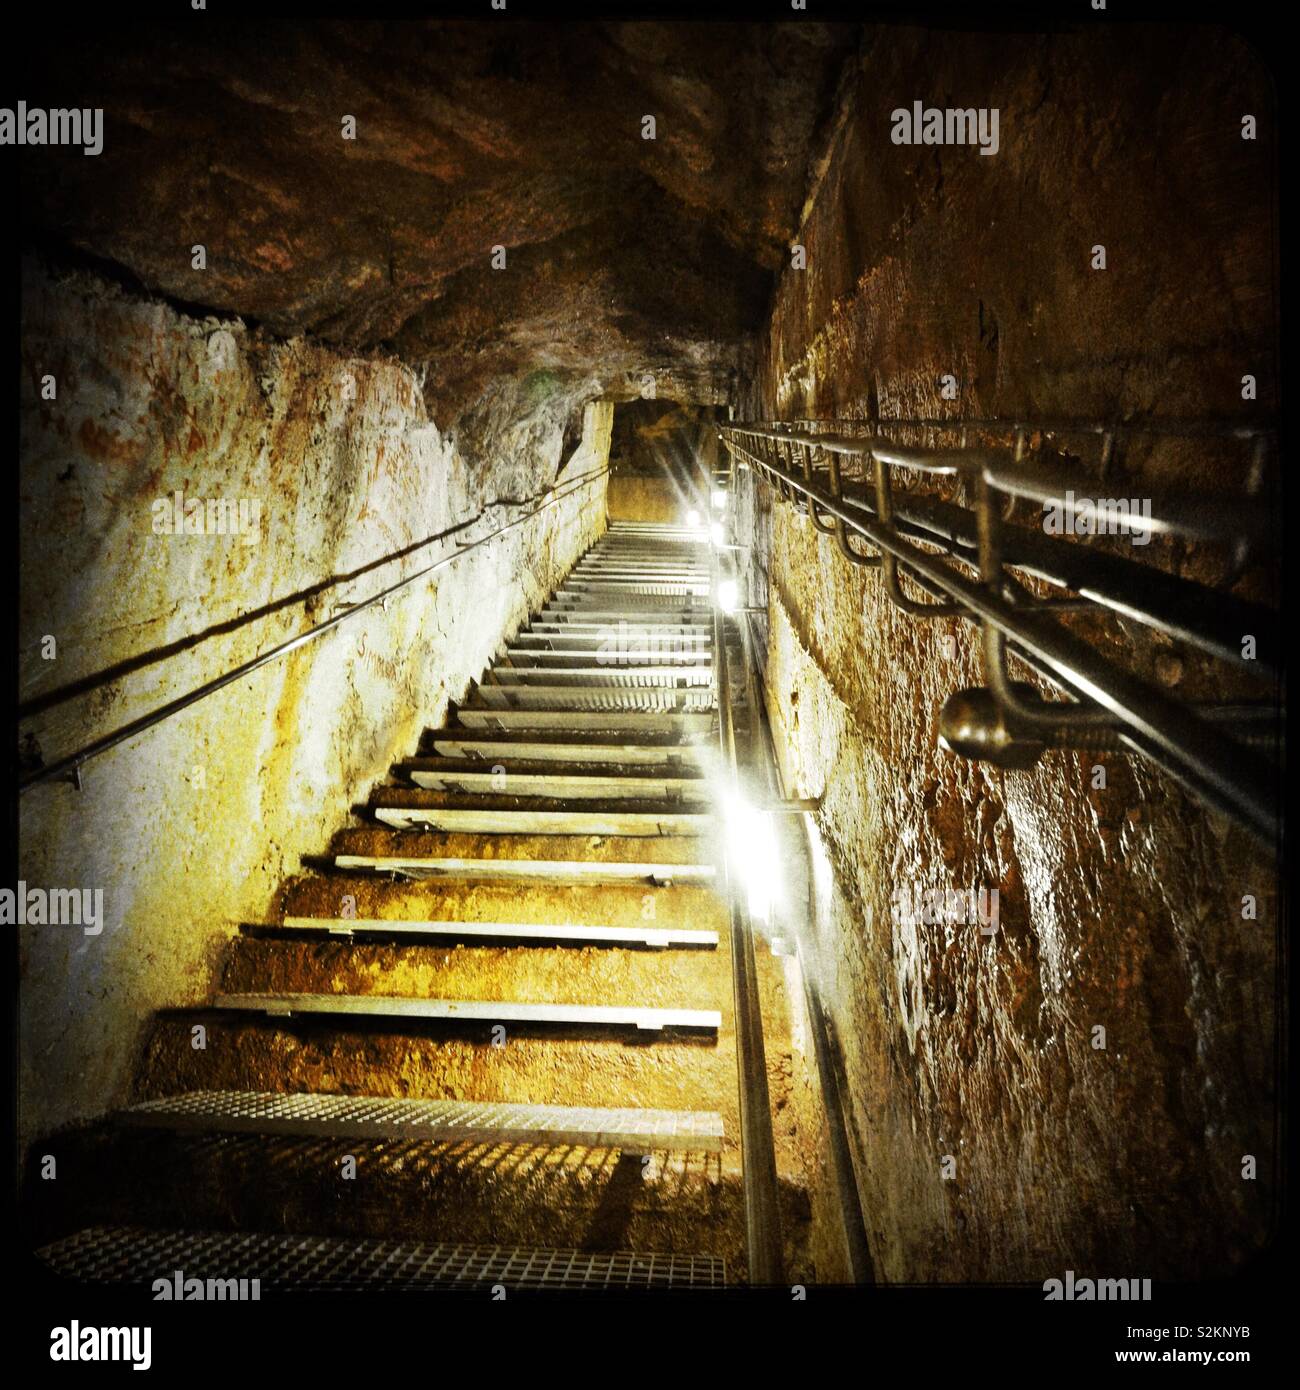 Underground industrial steps cut through rock Stock Photo